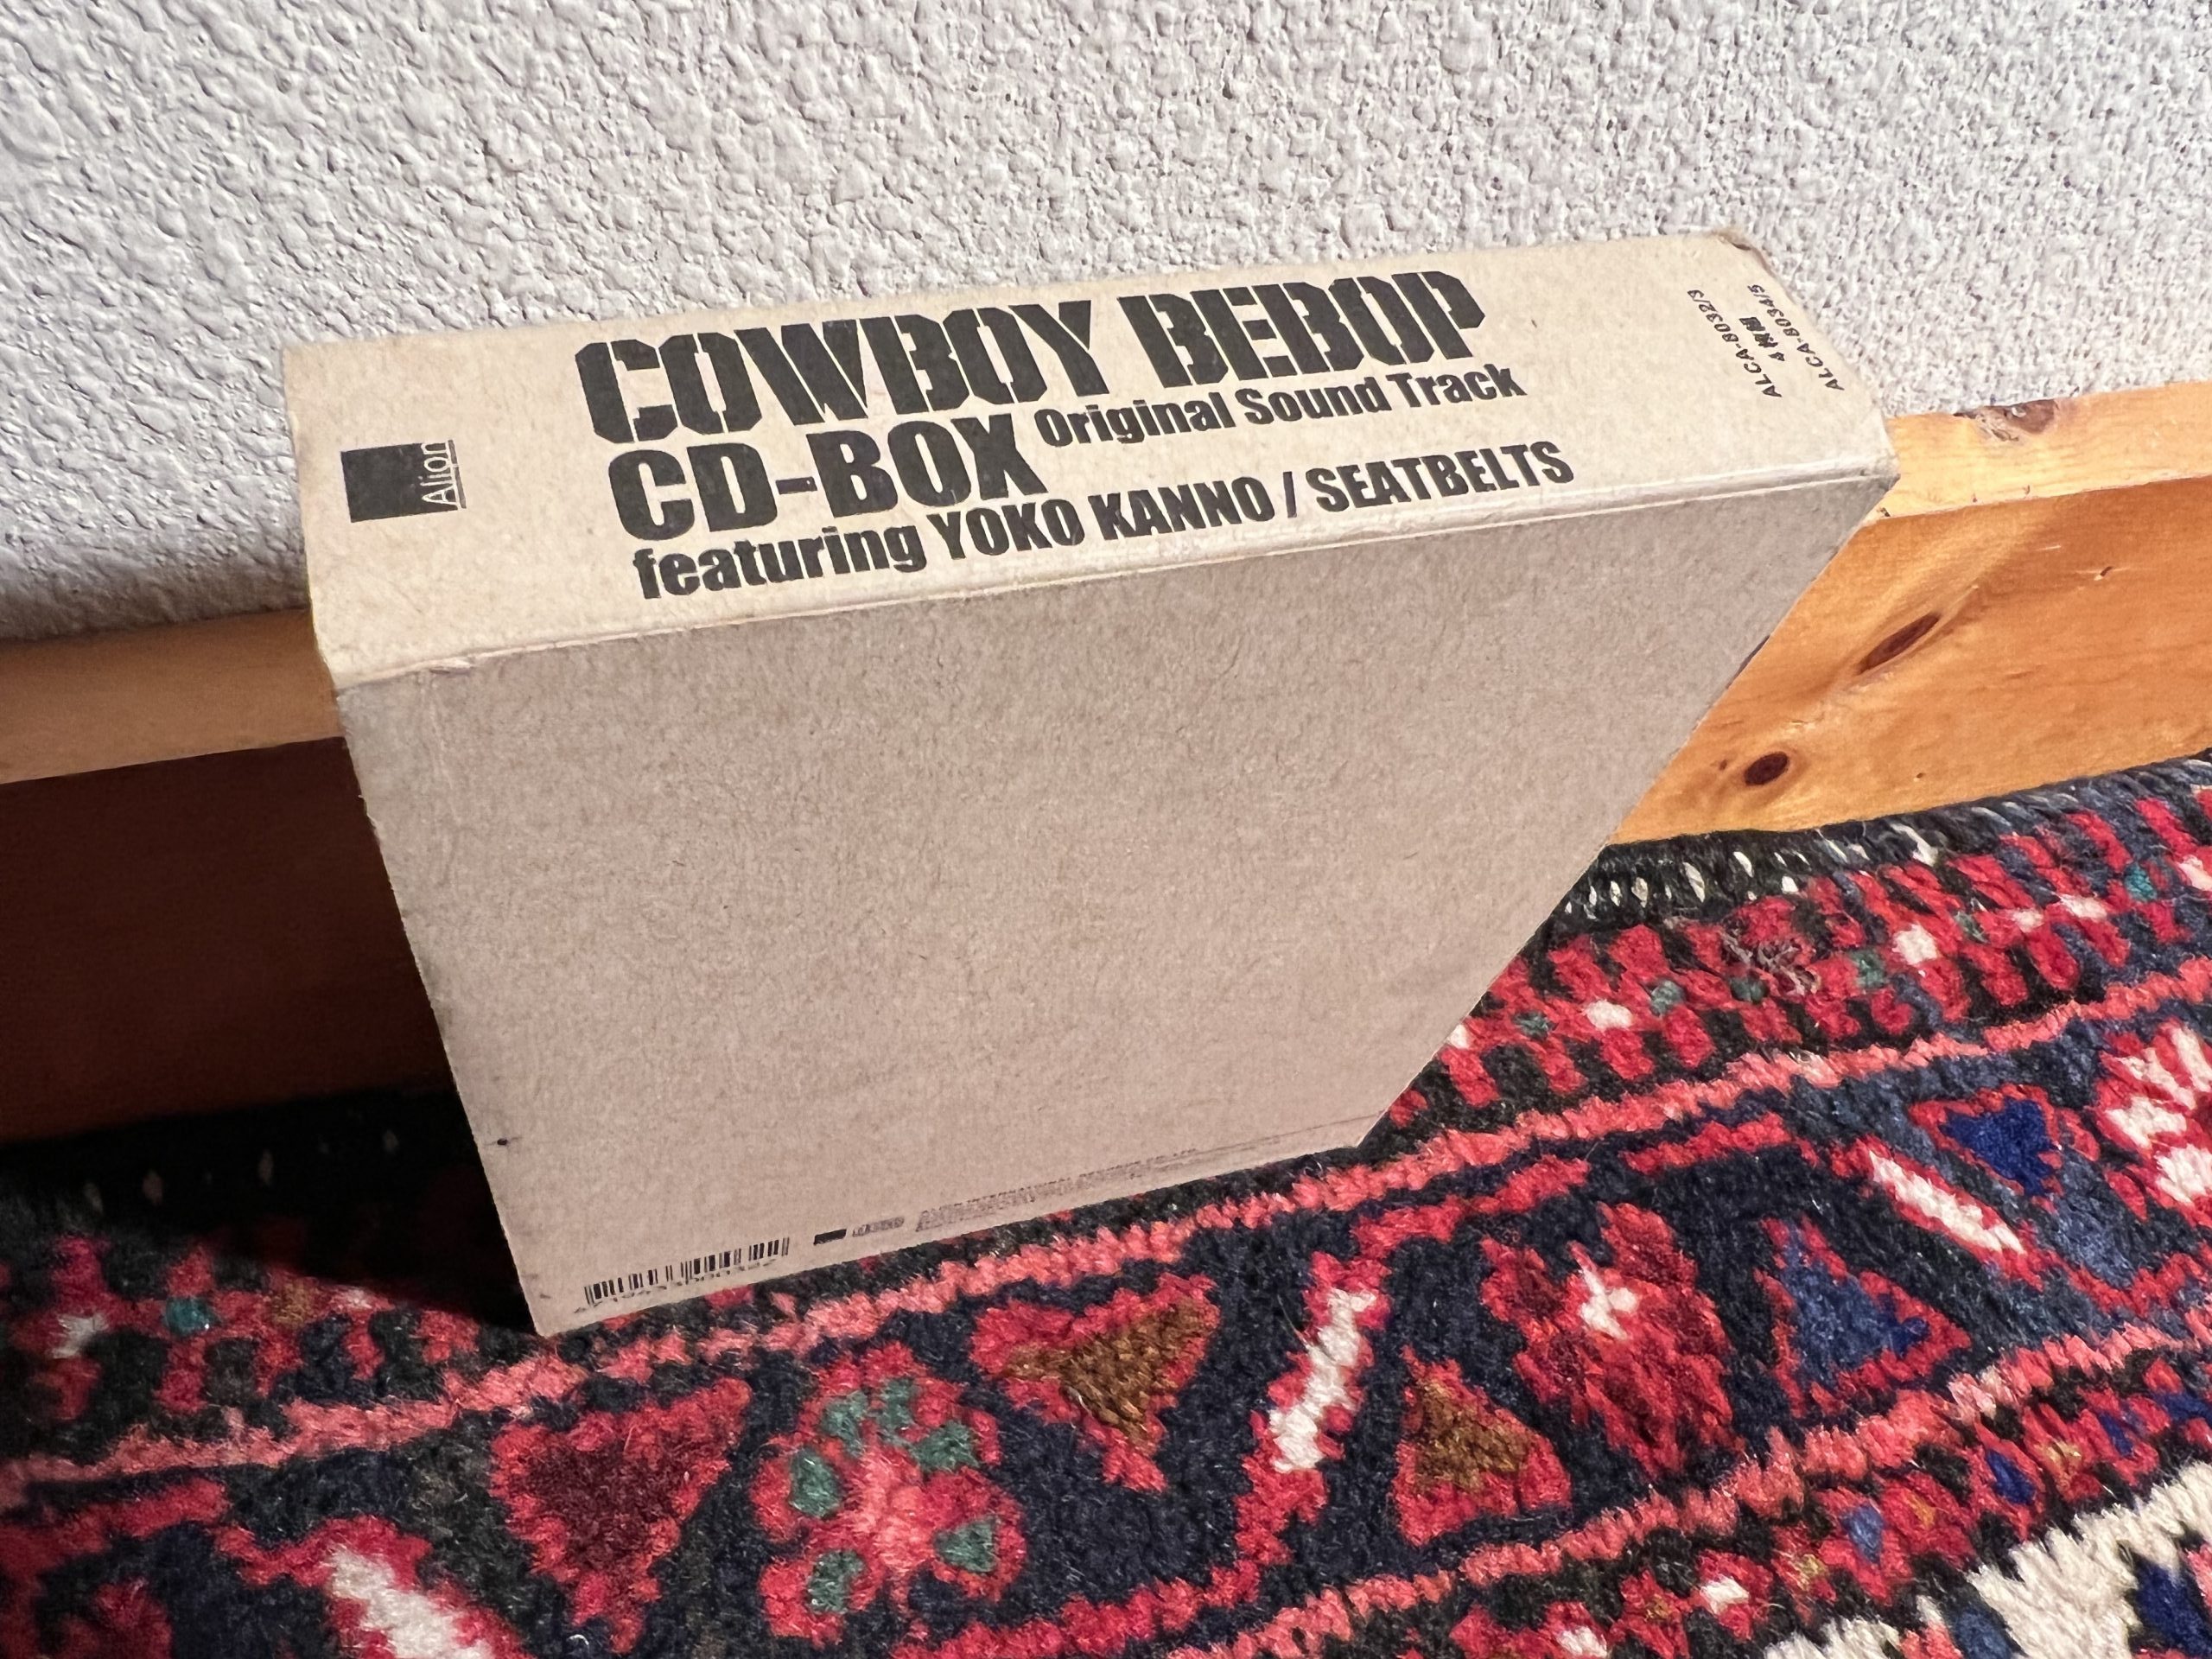 The Seatbelts, Yoko Kanno – Cowboy Bebop 4 CD-Box Original Sound Track